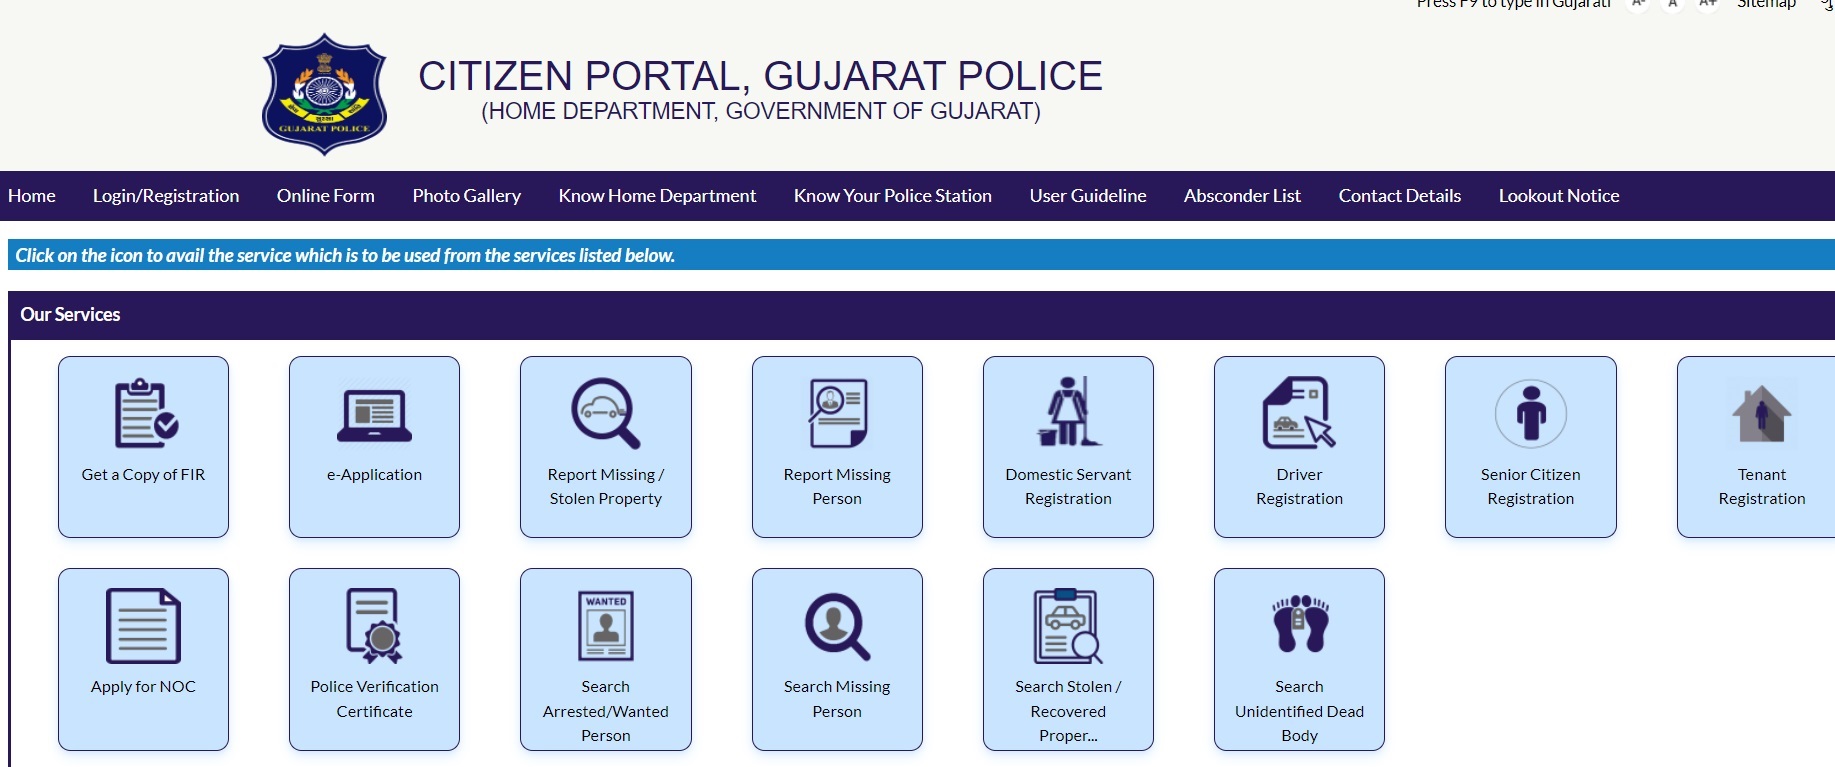 Citizen Portal Gujarat Police Services List .in  Registration / Login